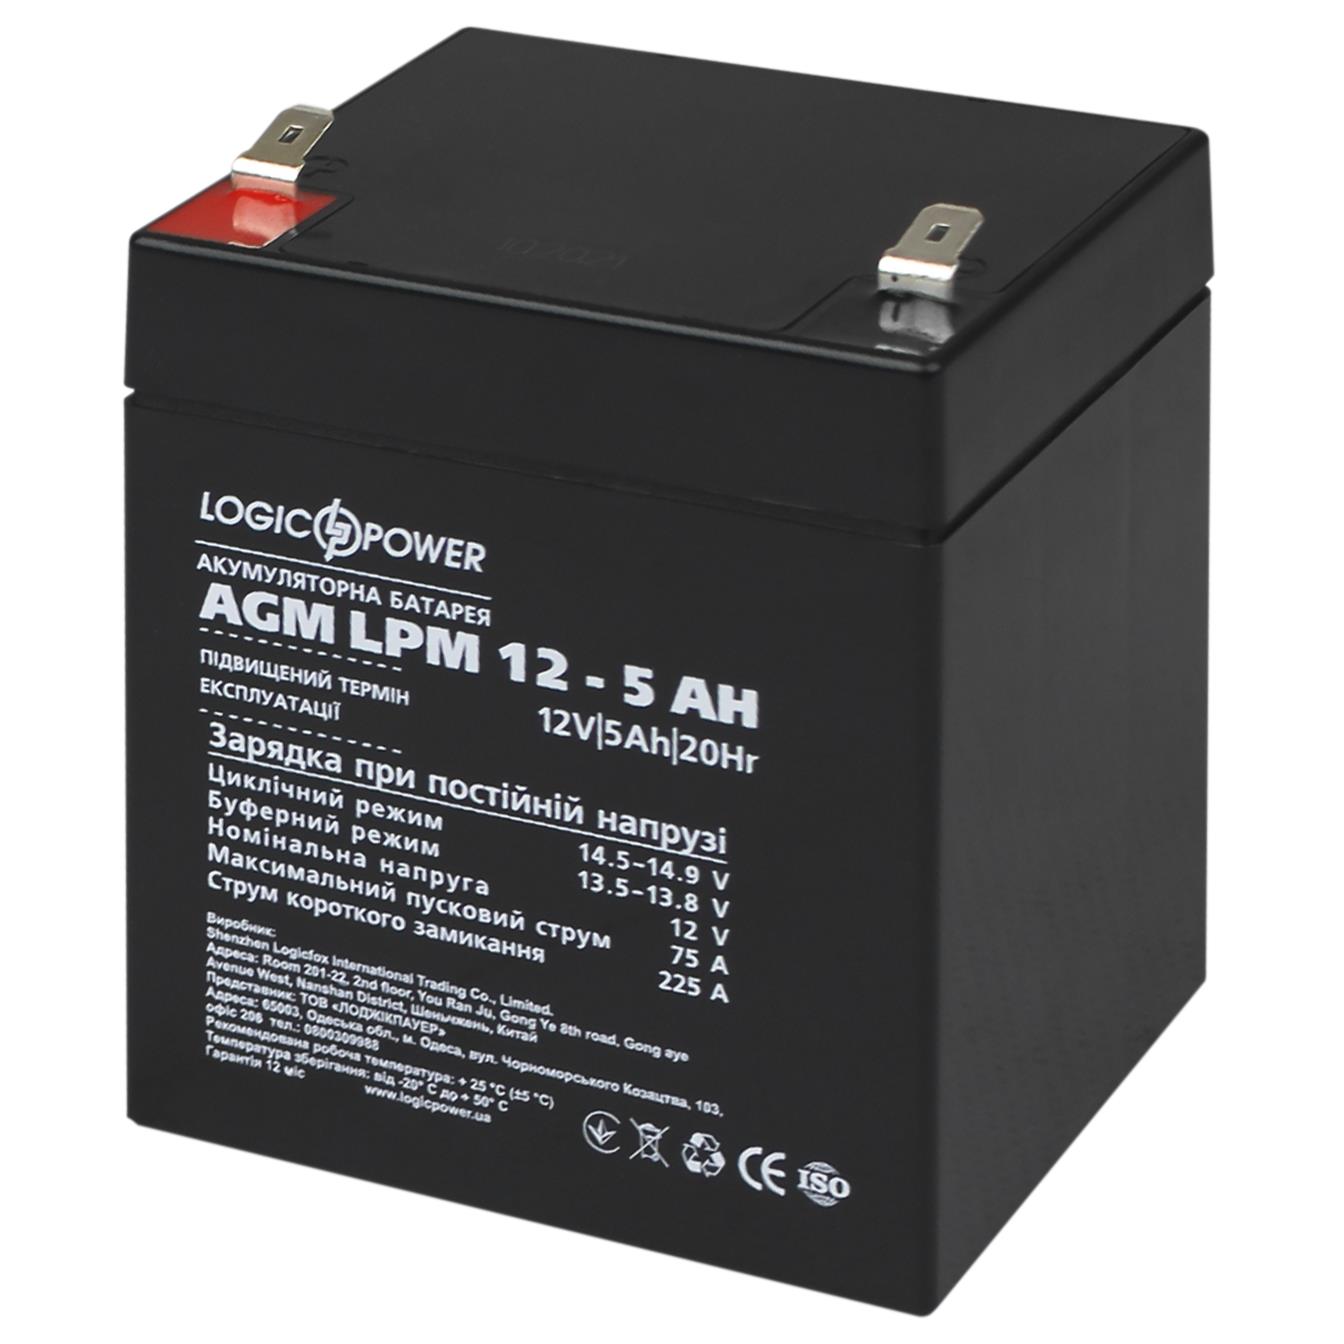 Цена аккумулятор свинцово-кислотный agm LogicPower AGM LPM 12V - 5 Ah (3861) в Киеве